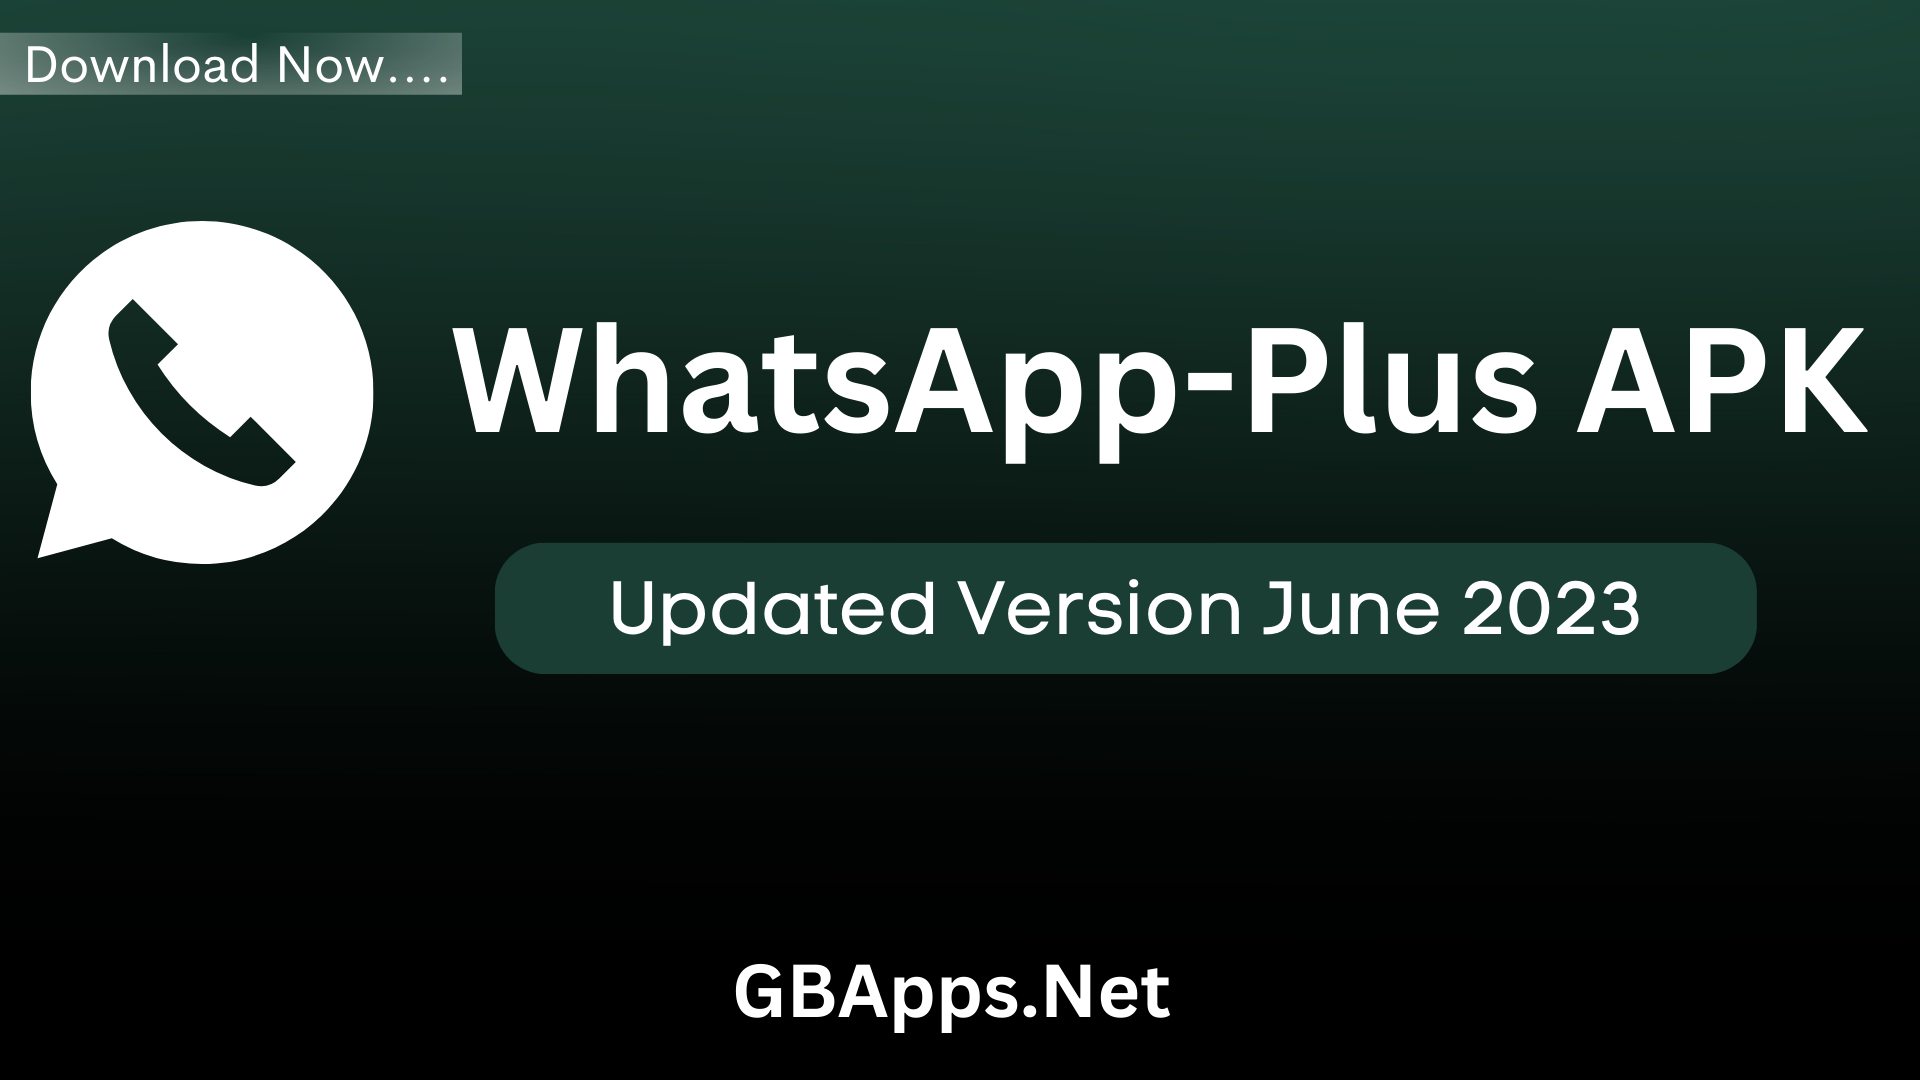 WhatsApp-Plus APK